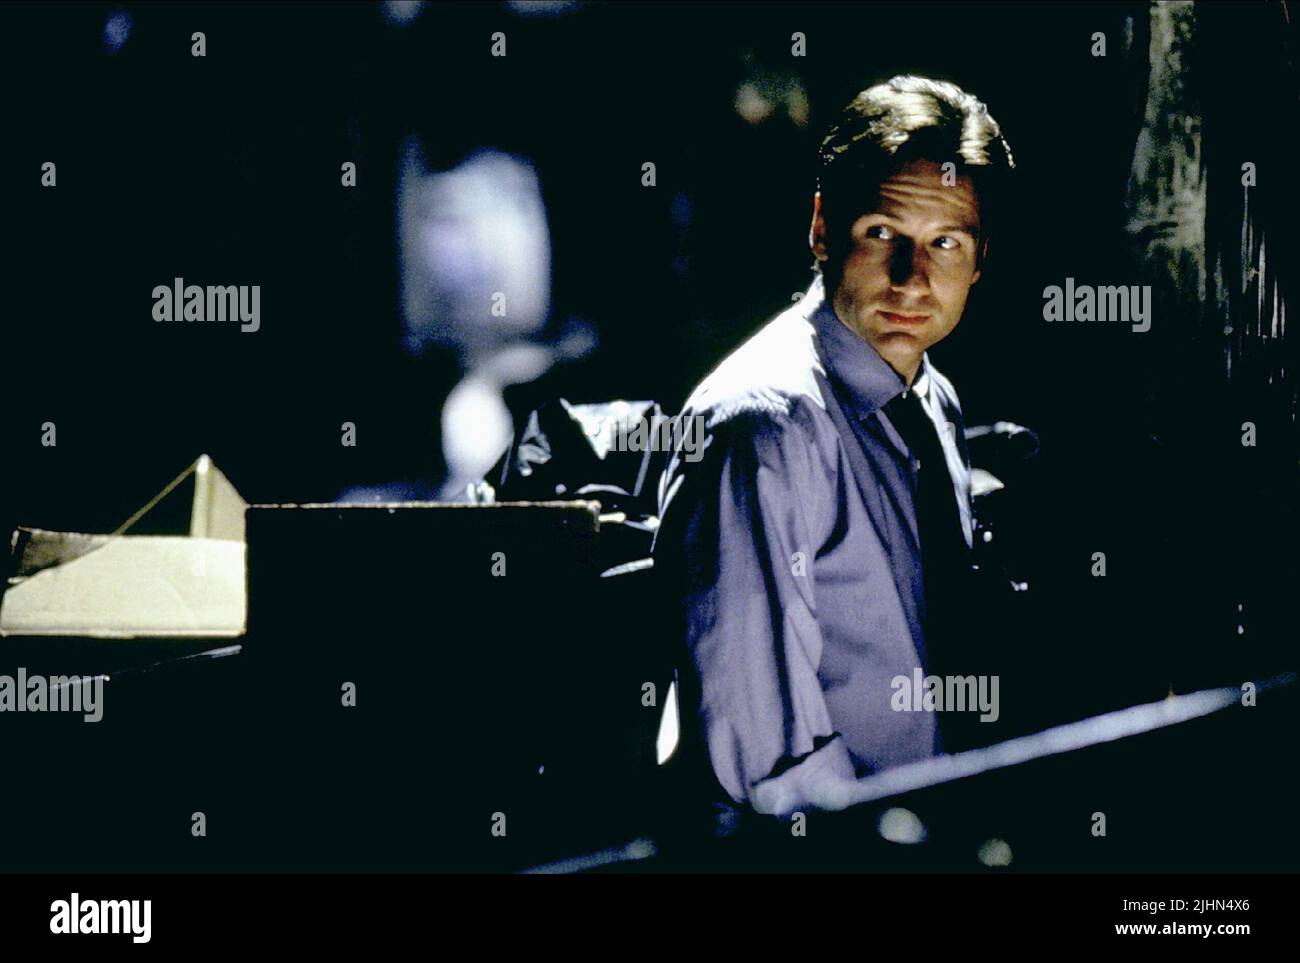 DAVID DUCHOVNY, THE X FILES, 1998 Stock Photo